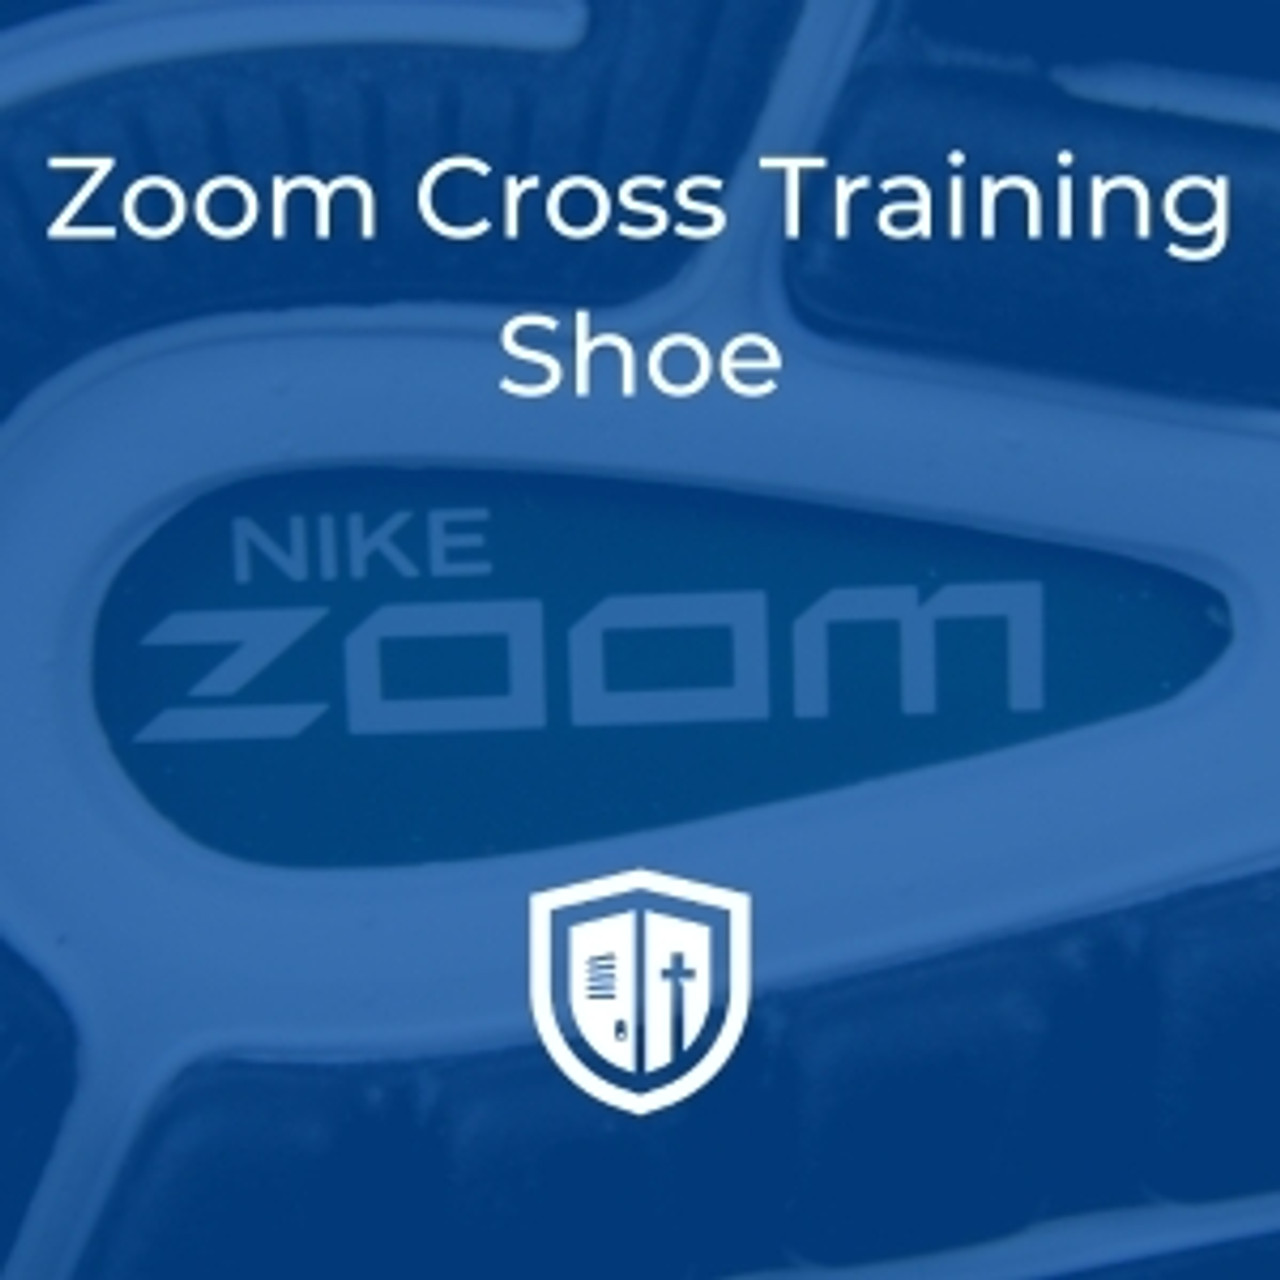 Cross Training Shoes